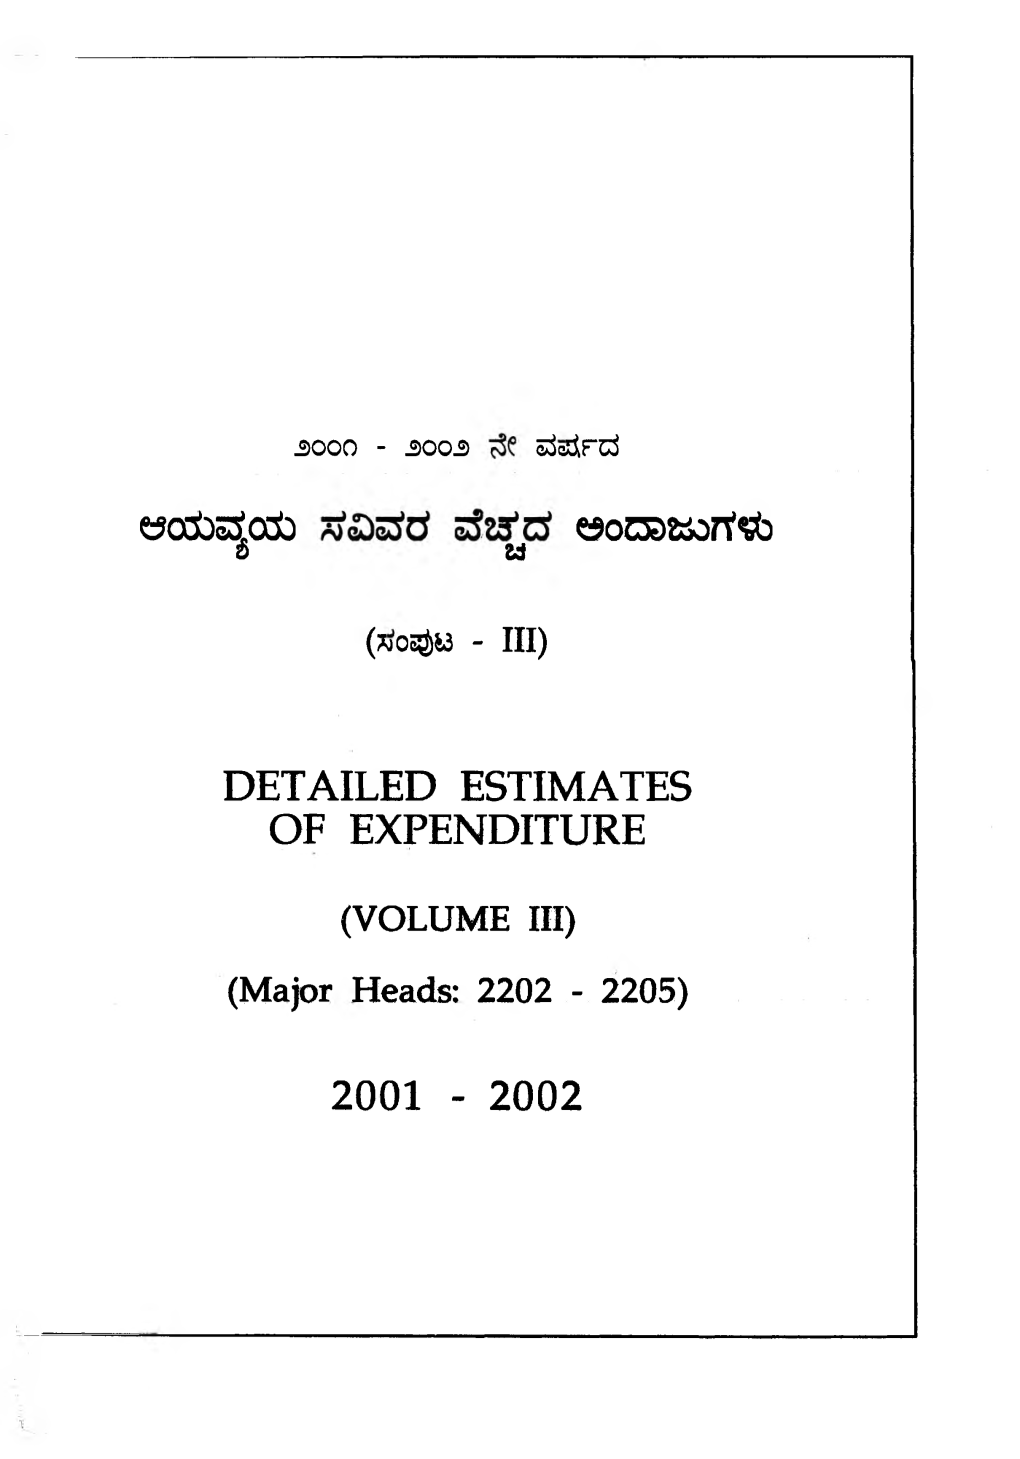 Detailed Estimates of Expenditure